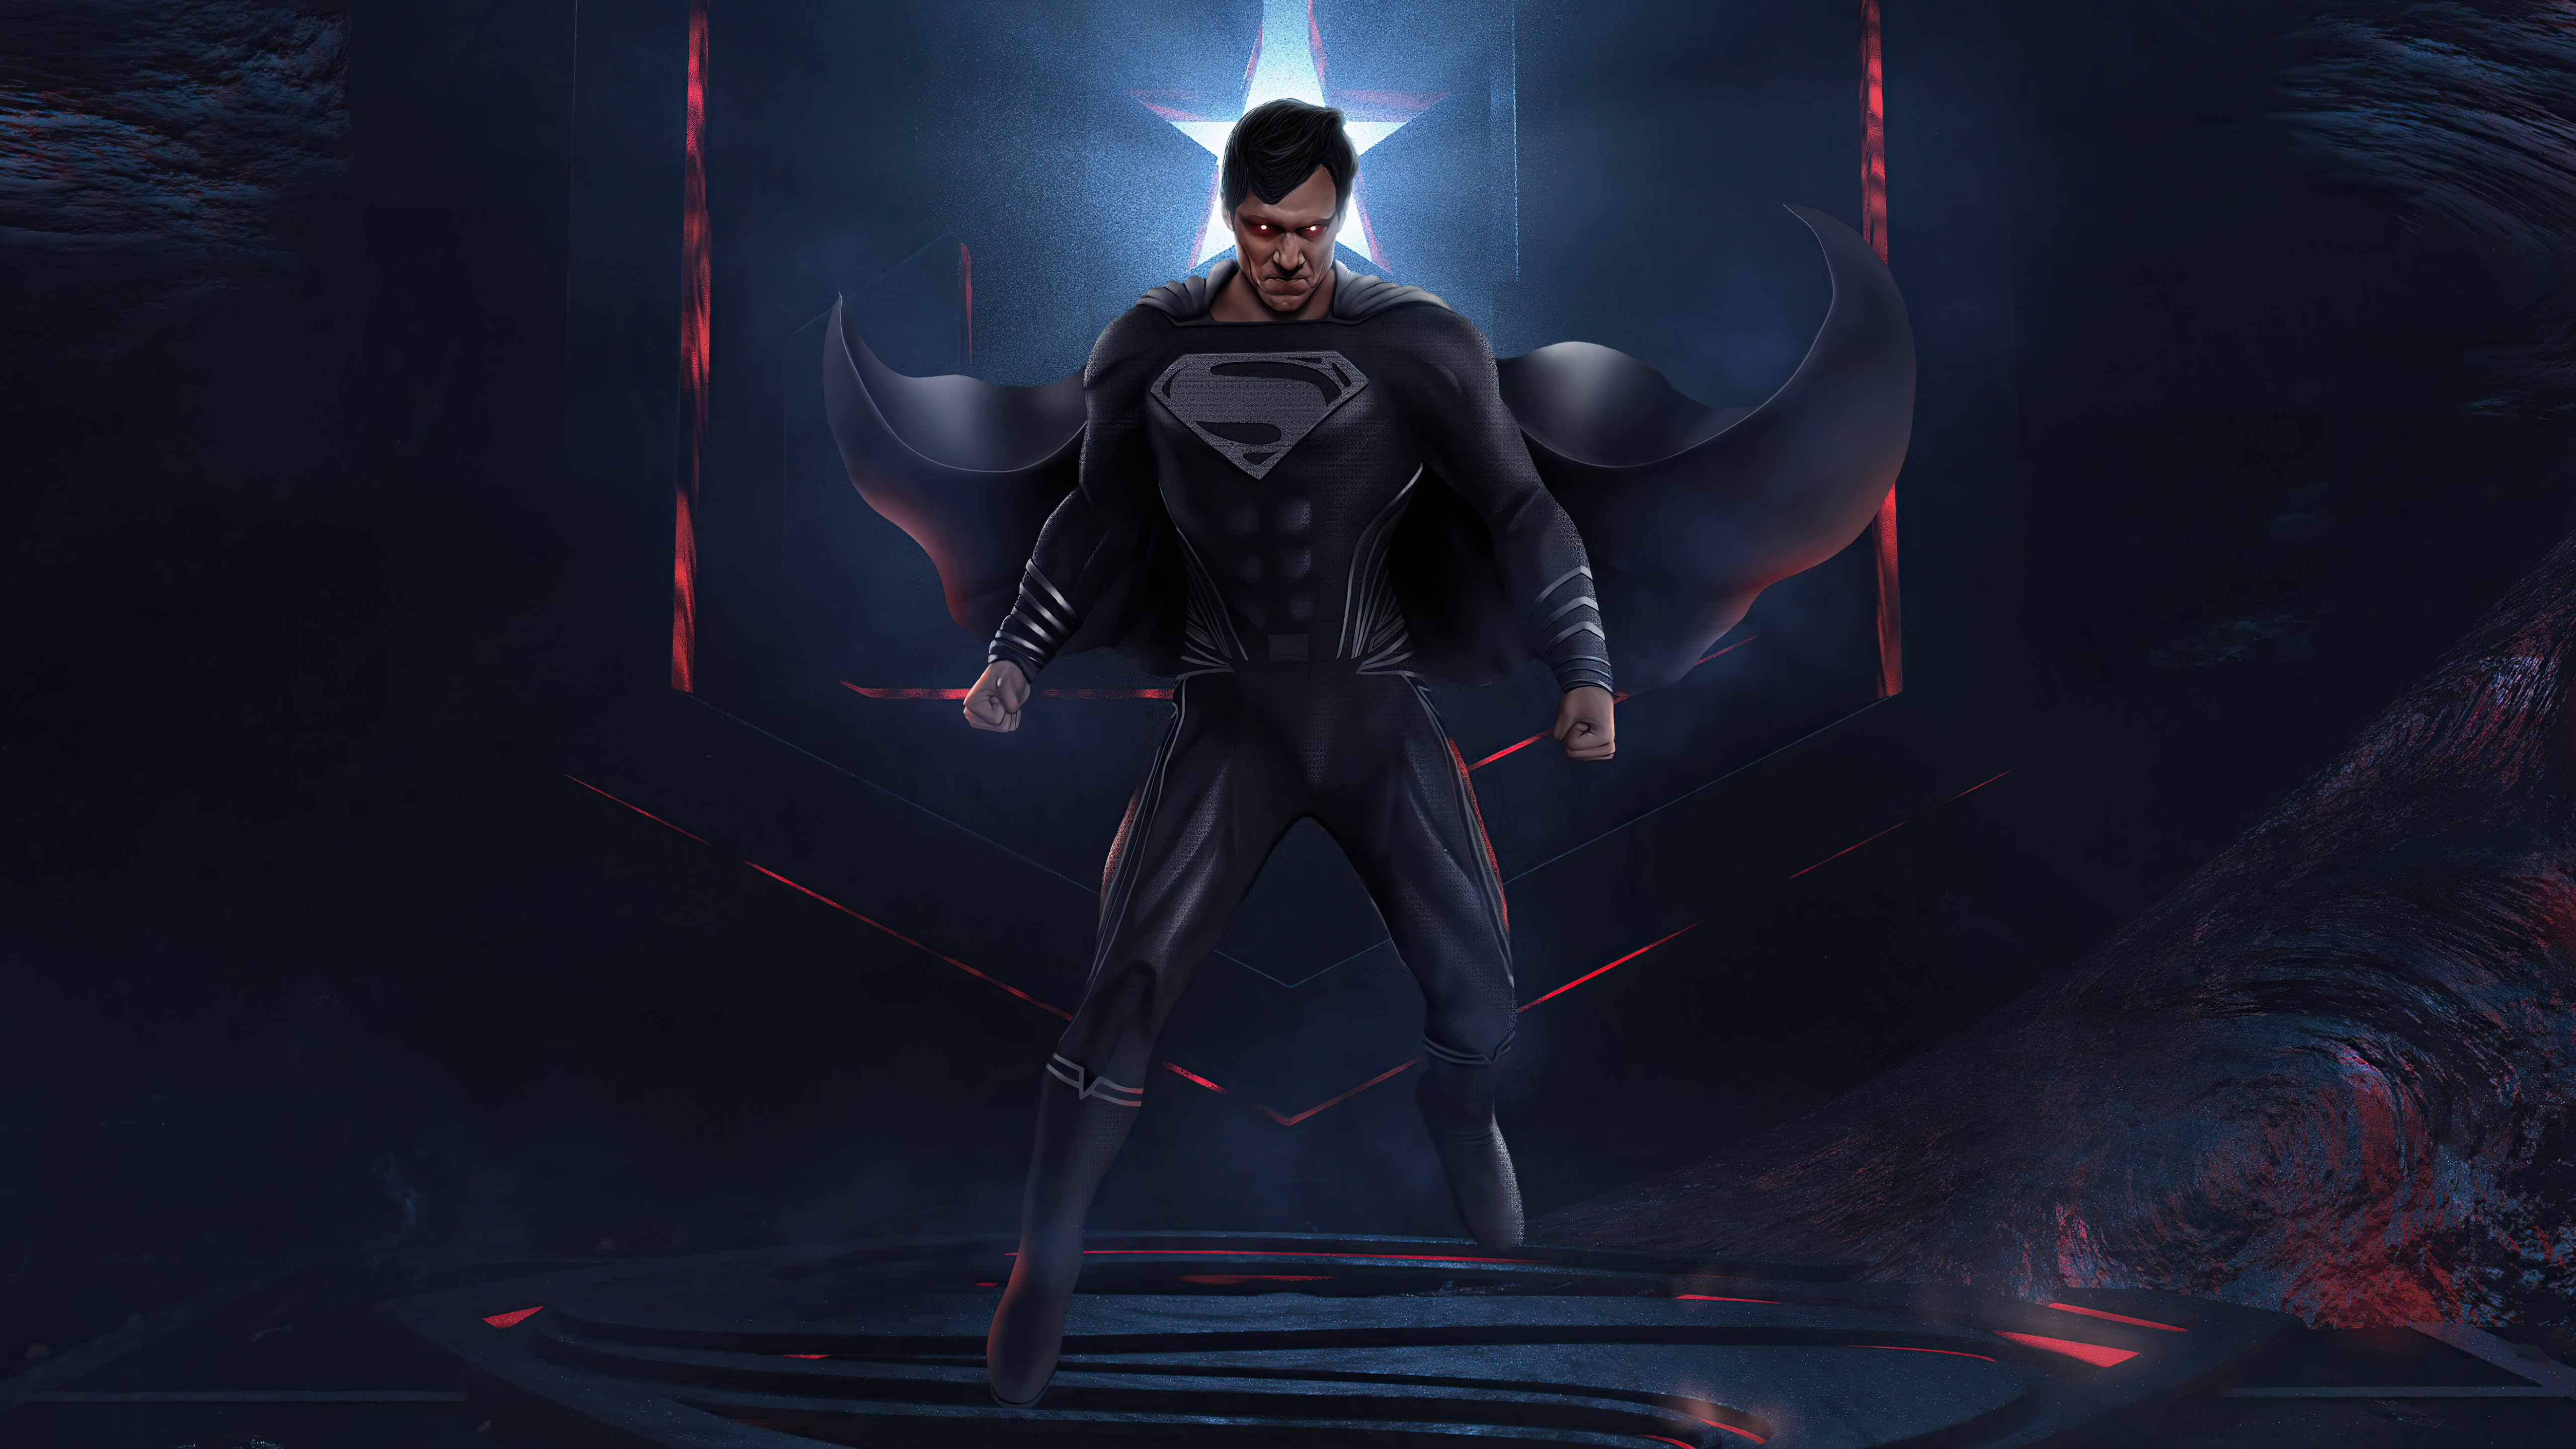 Zack Snyder's Justice League 4k Ultra HD Wallpaper by Visualsofazmat1